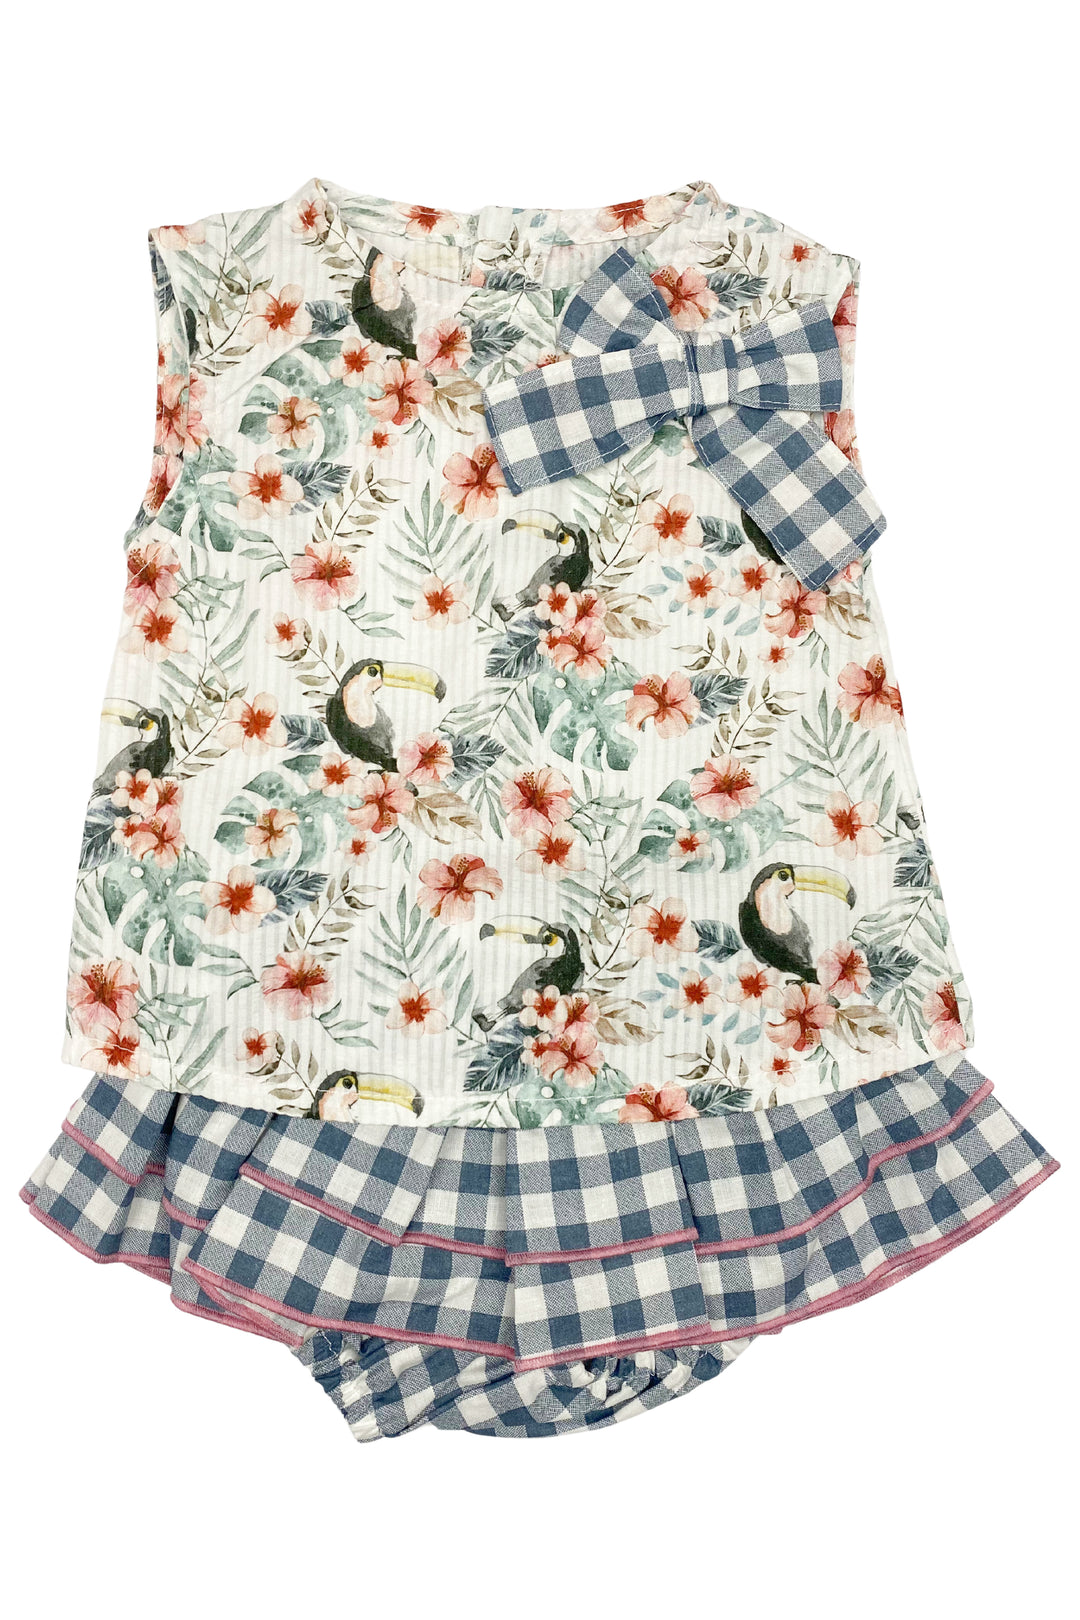 Valentina Bebes "Veronica" Toucan Print Blouse & Gingham Skirt | Millie and John